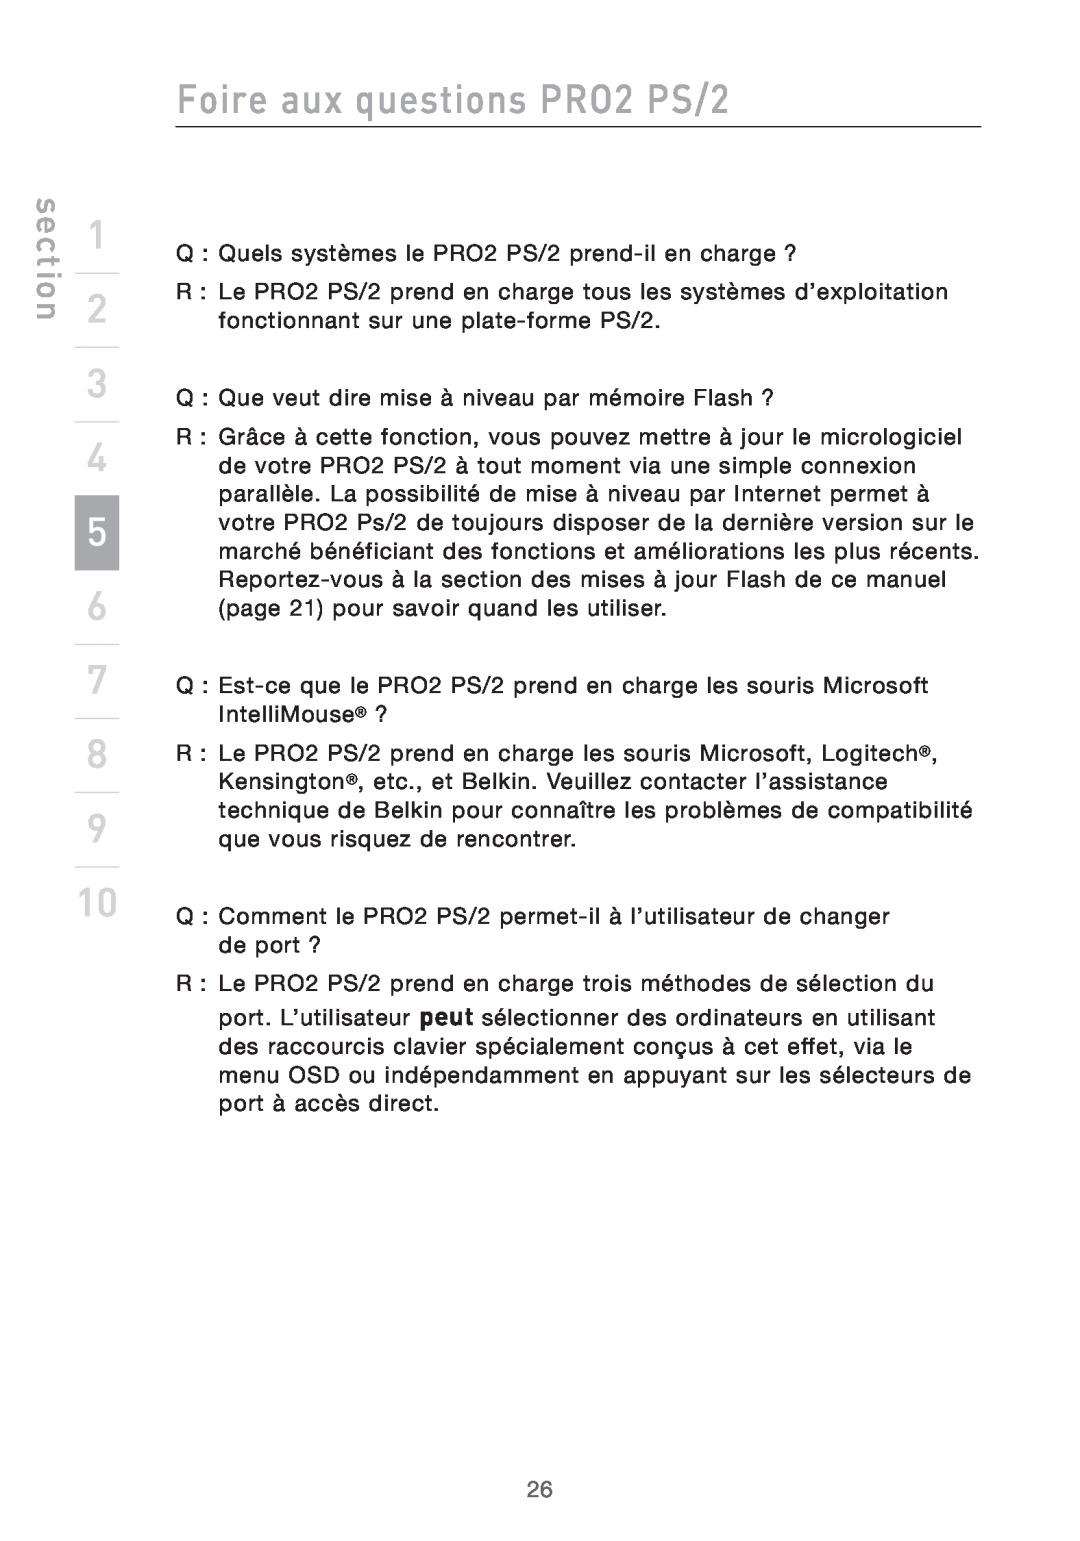 Belkin user manual Foire aux questions PRO2 PS/2, section 